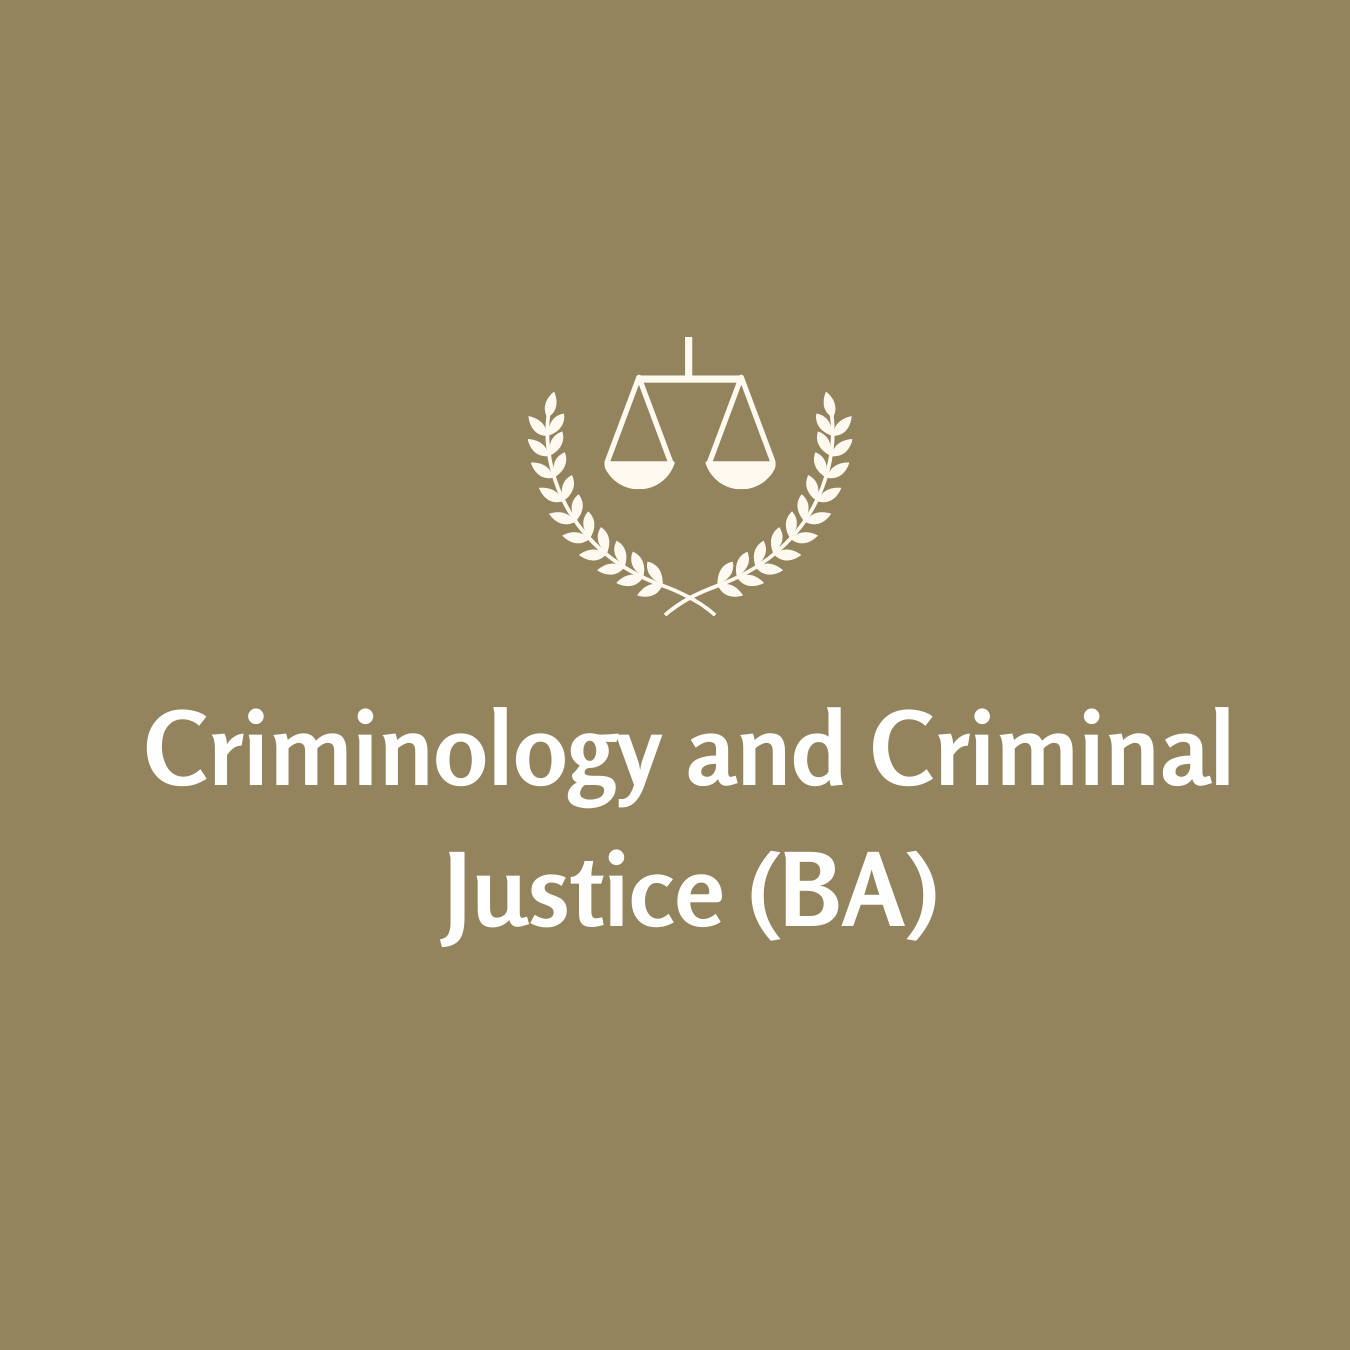 BA in Criminology